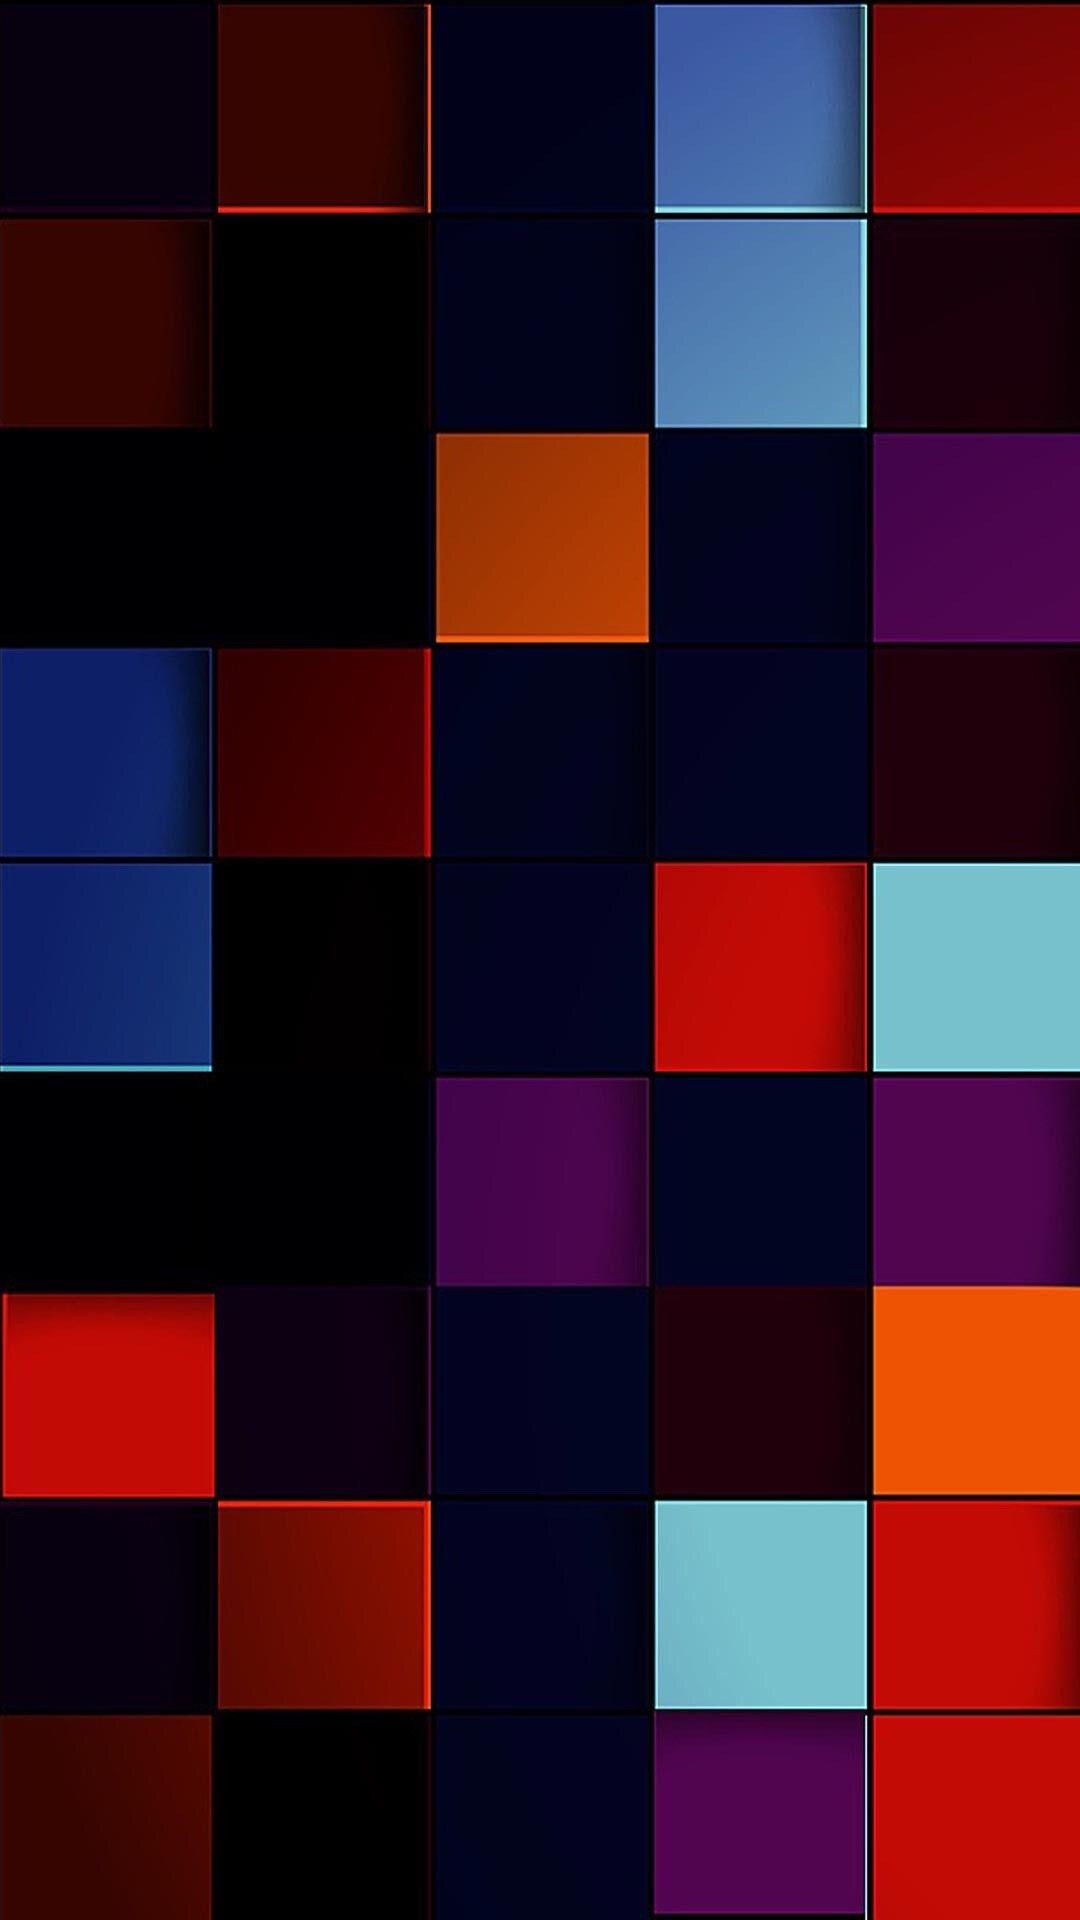 Colorful Geometric Shapes Wallpaper. Geometric shapes wallpaper, Abstract iphone wallpaper, Galaxy phone wallpaper